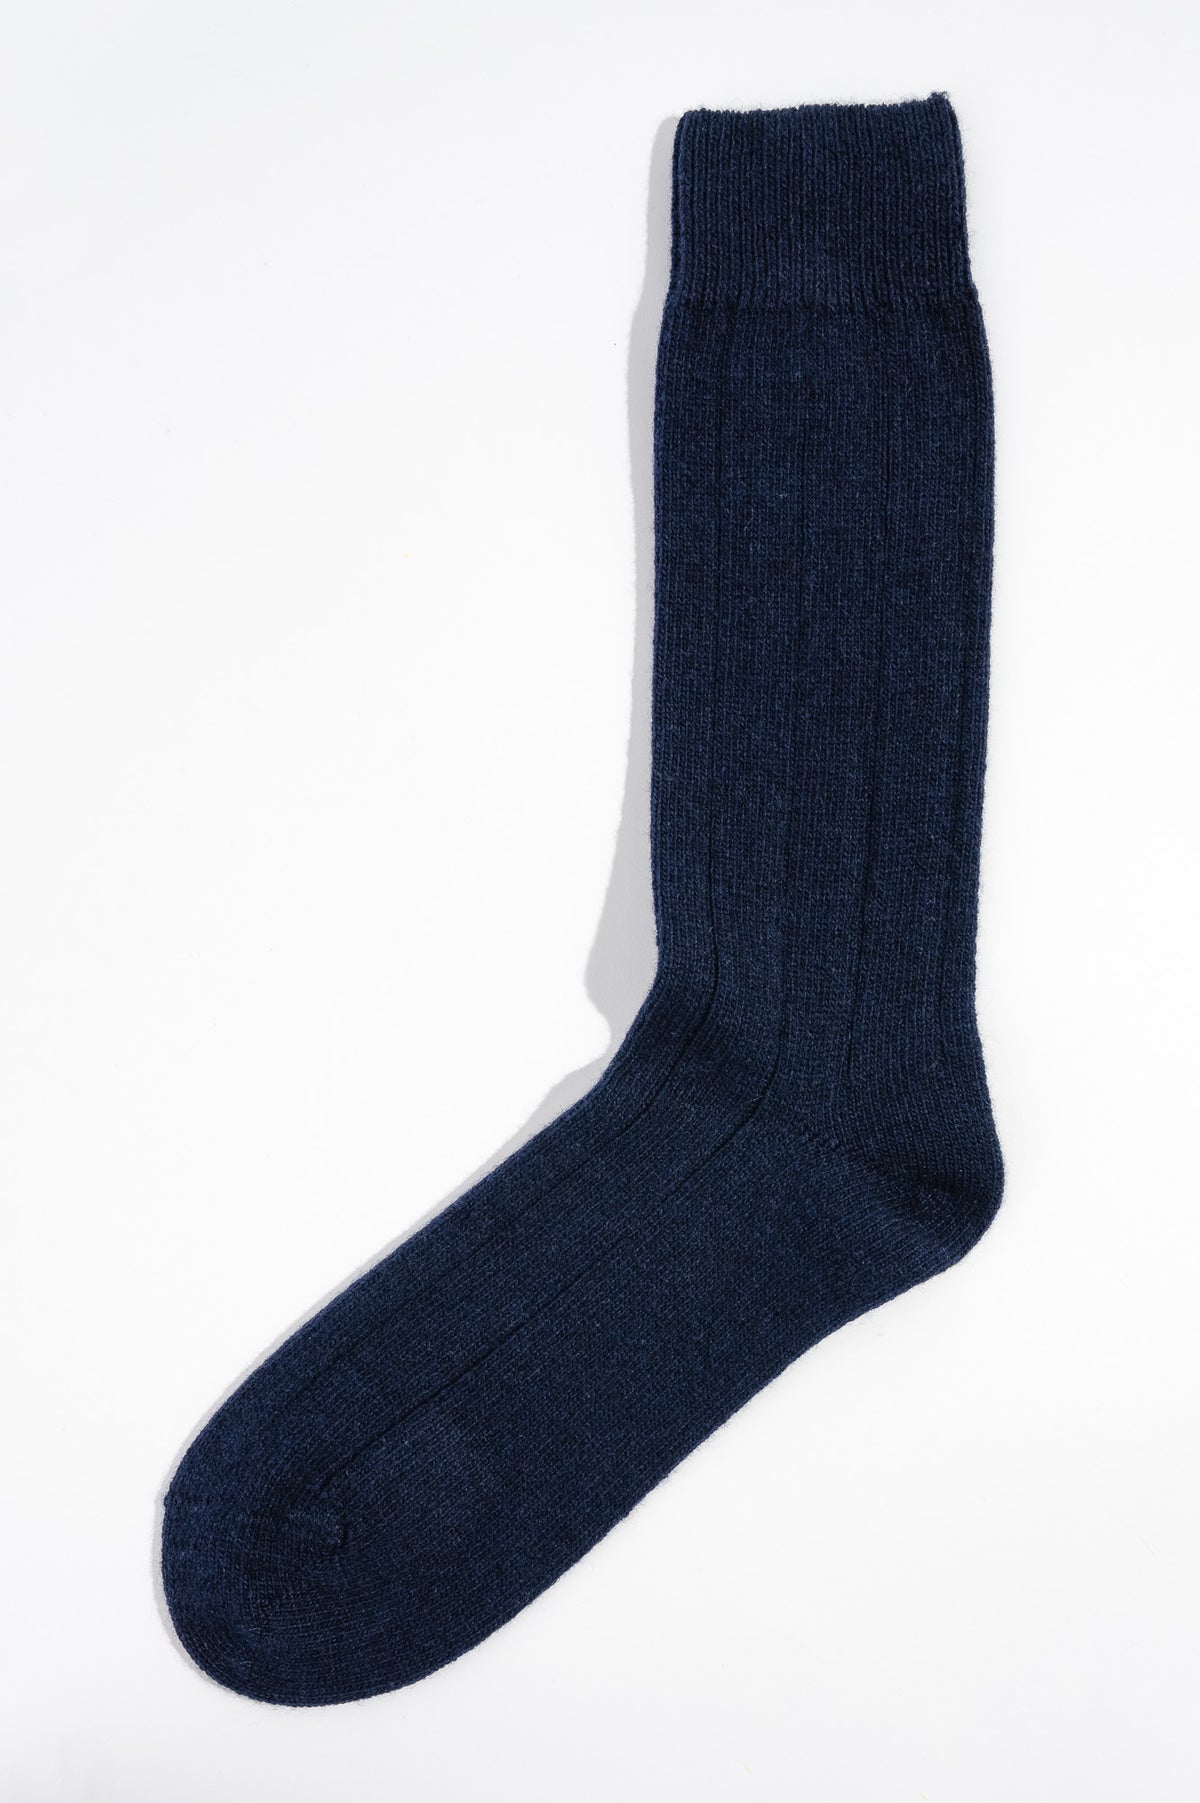 Duvet Men's Stocking 389 | Navy Blue Merino Wool Cashmere